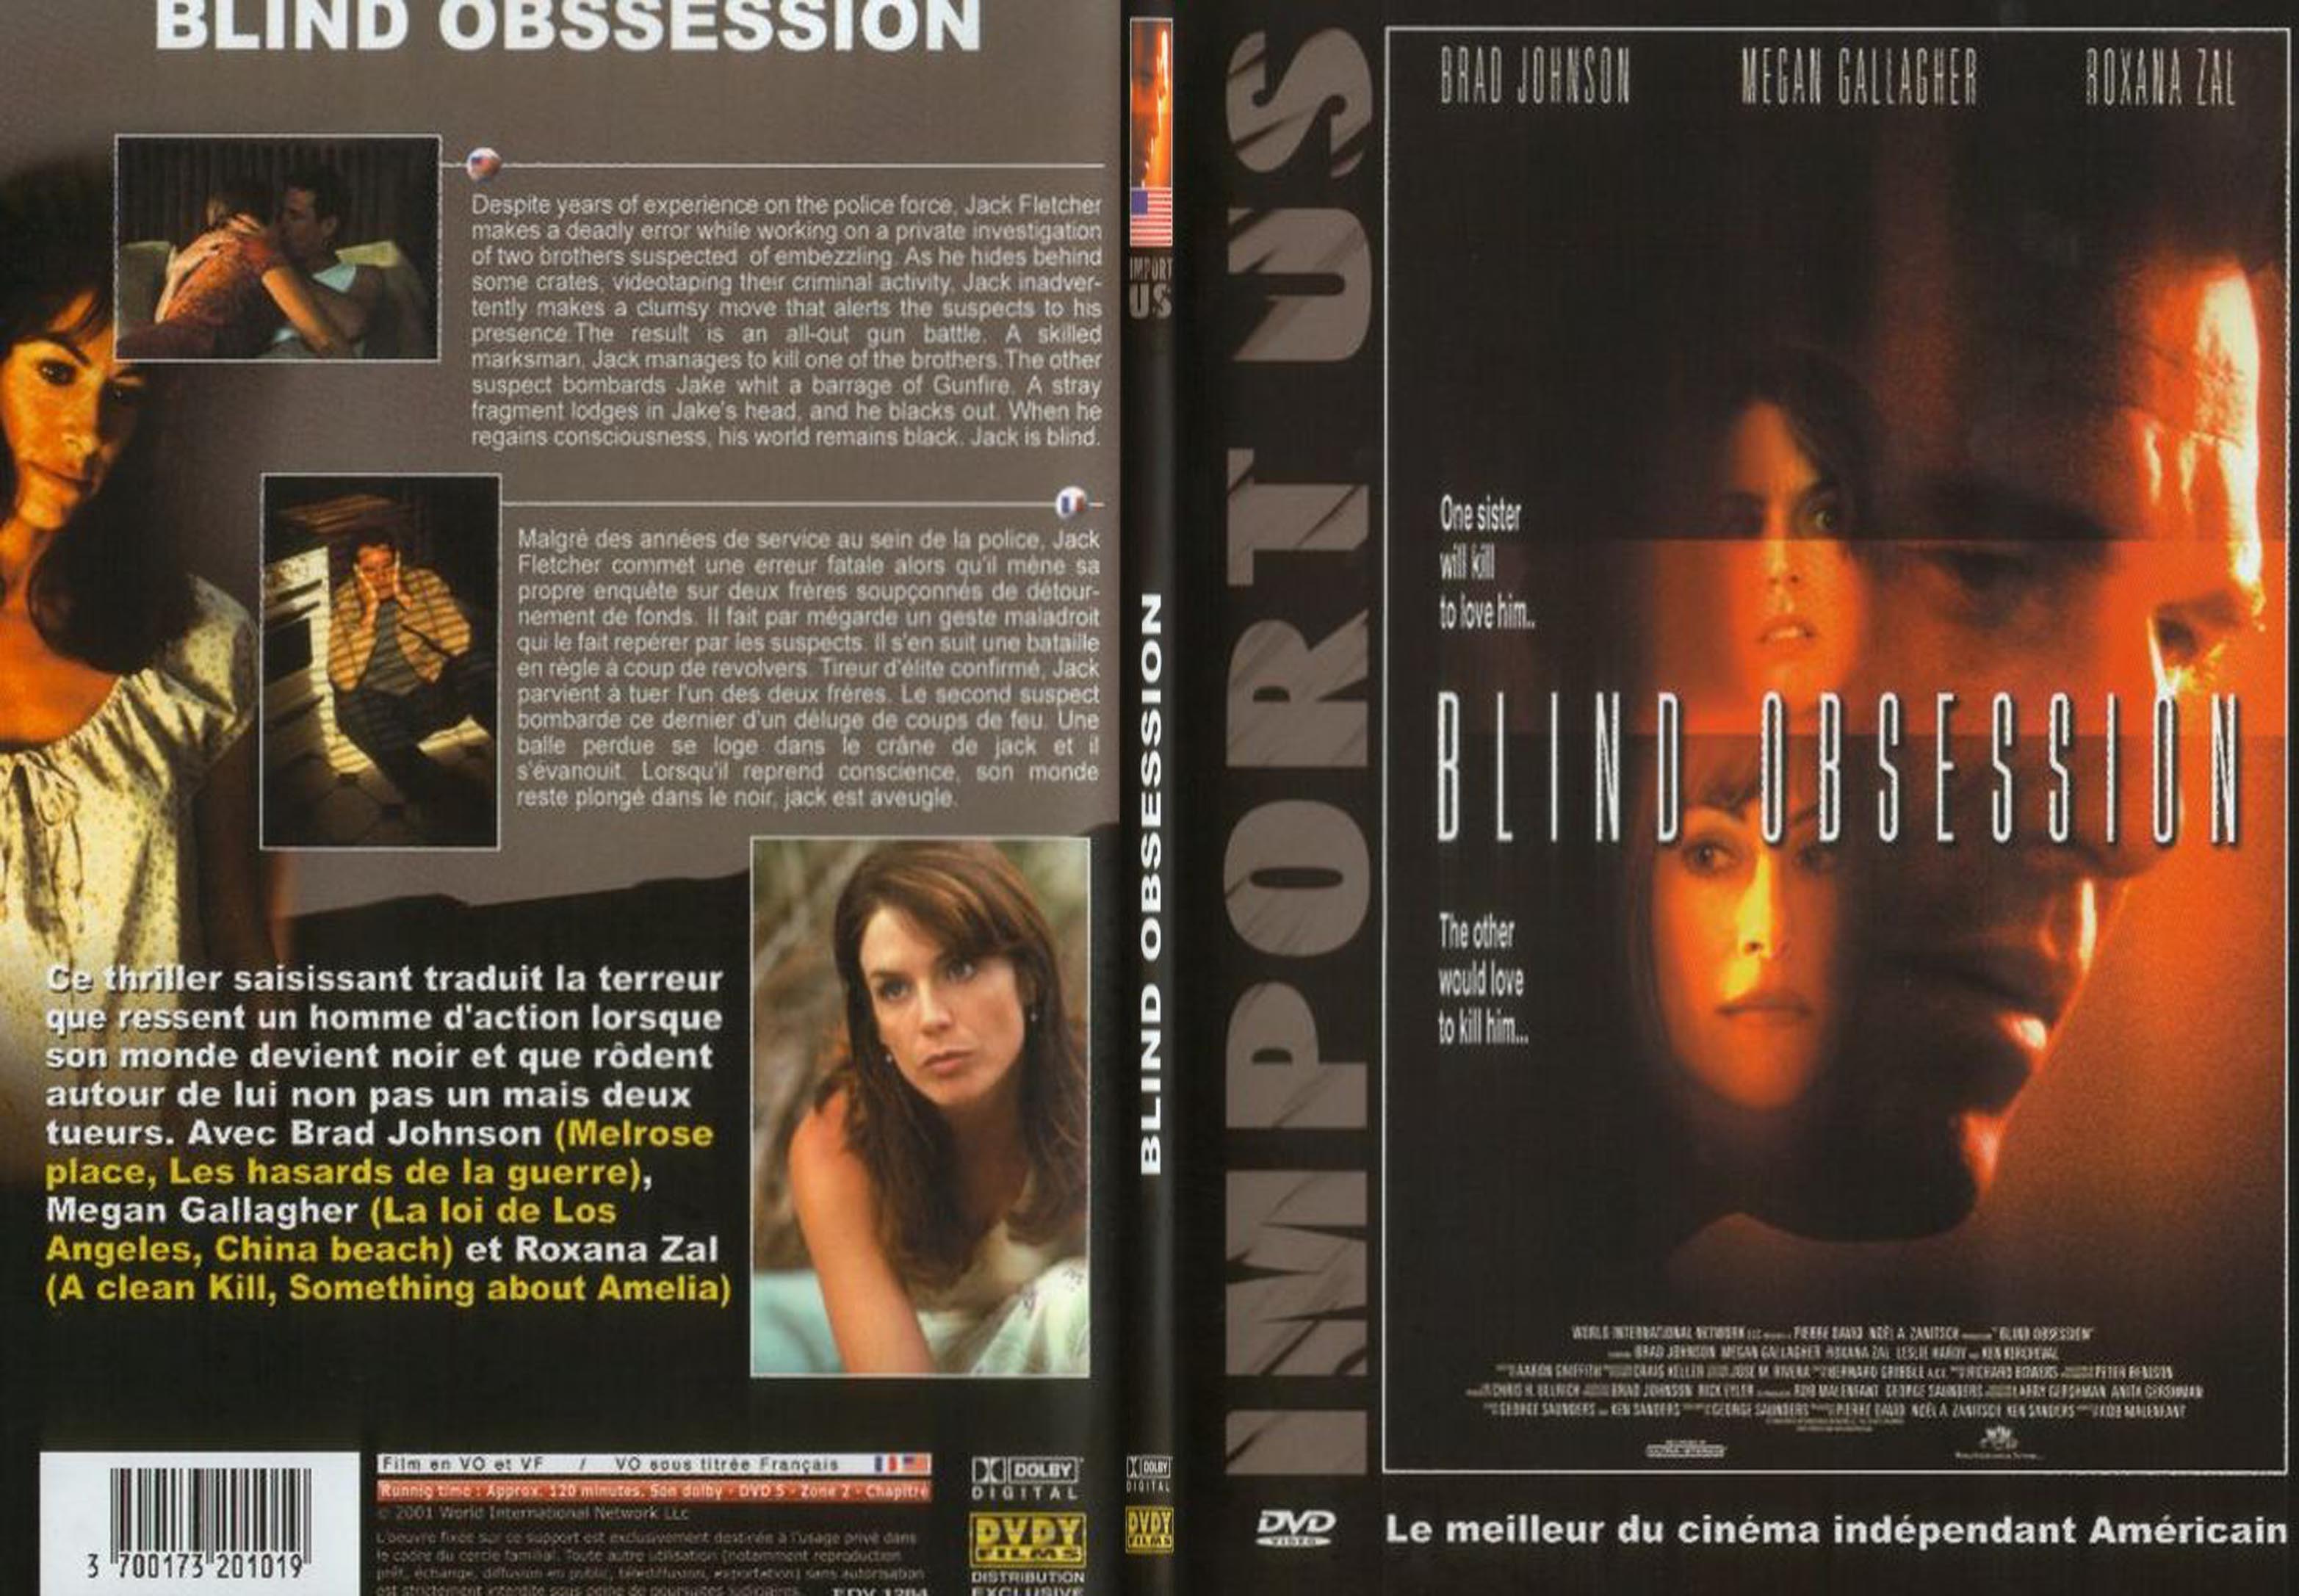 Jaquette DVD Blind obsession - SLIM